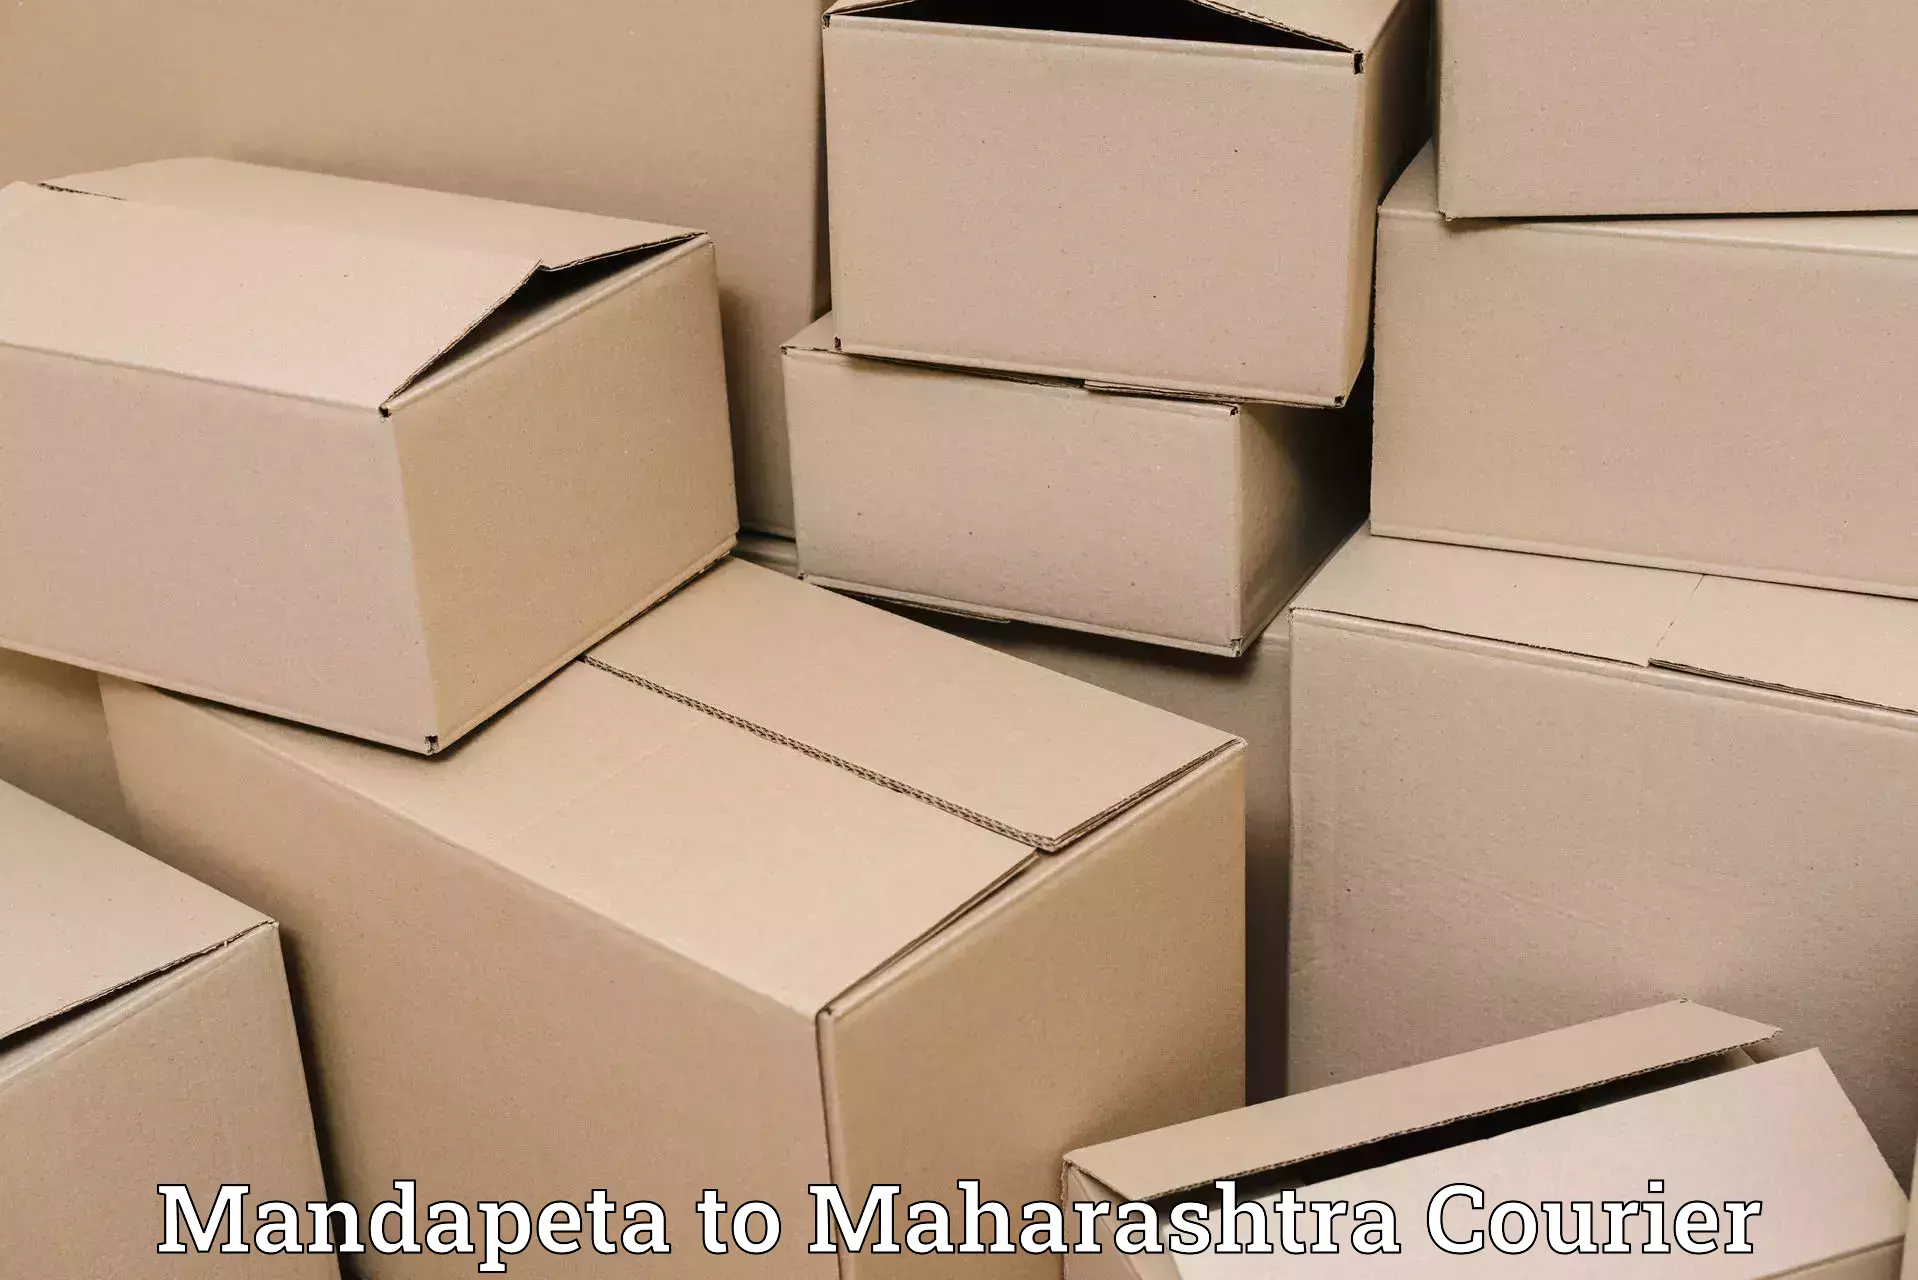 Shipping and handling Mandapeta to Maharashtra